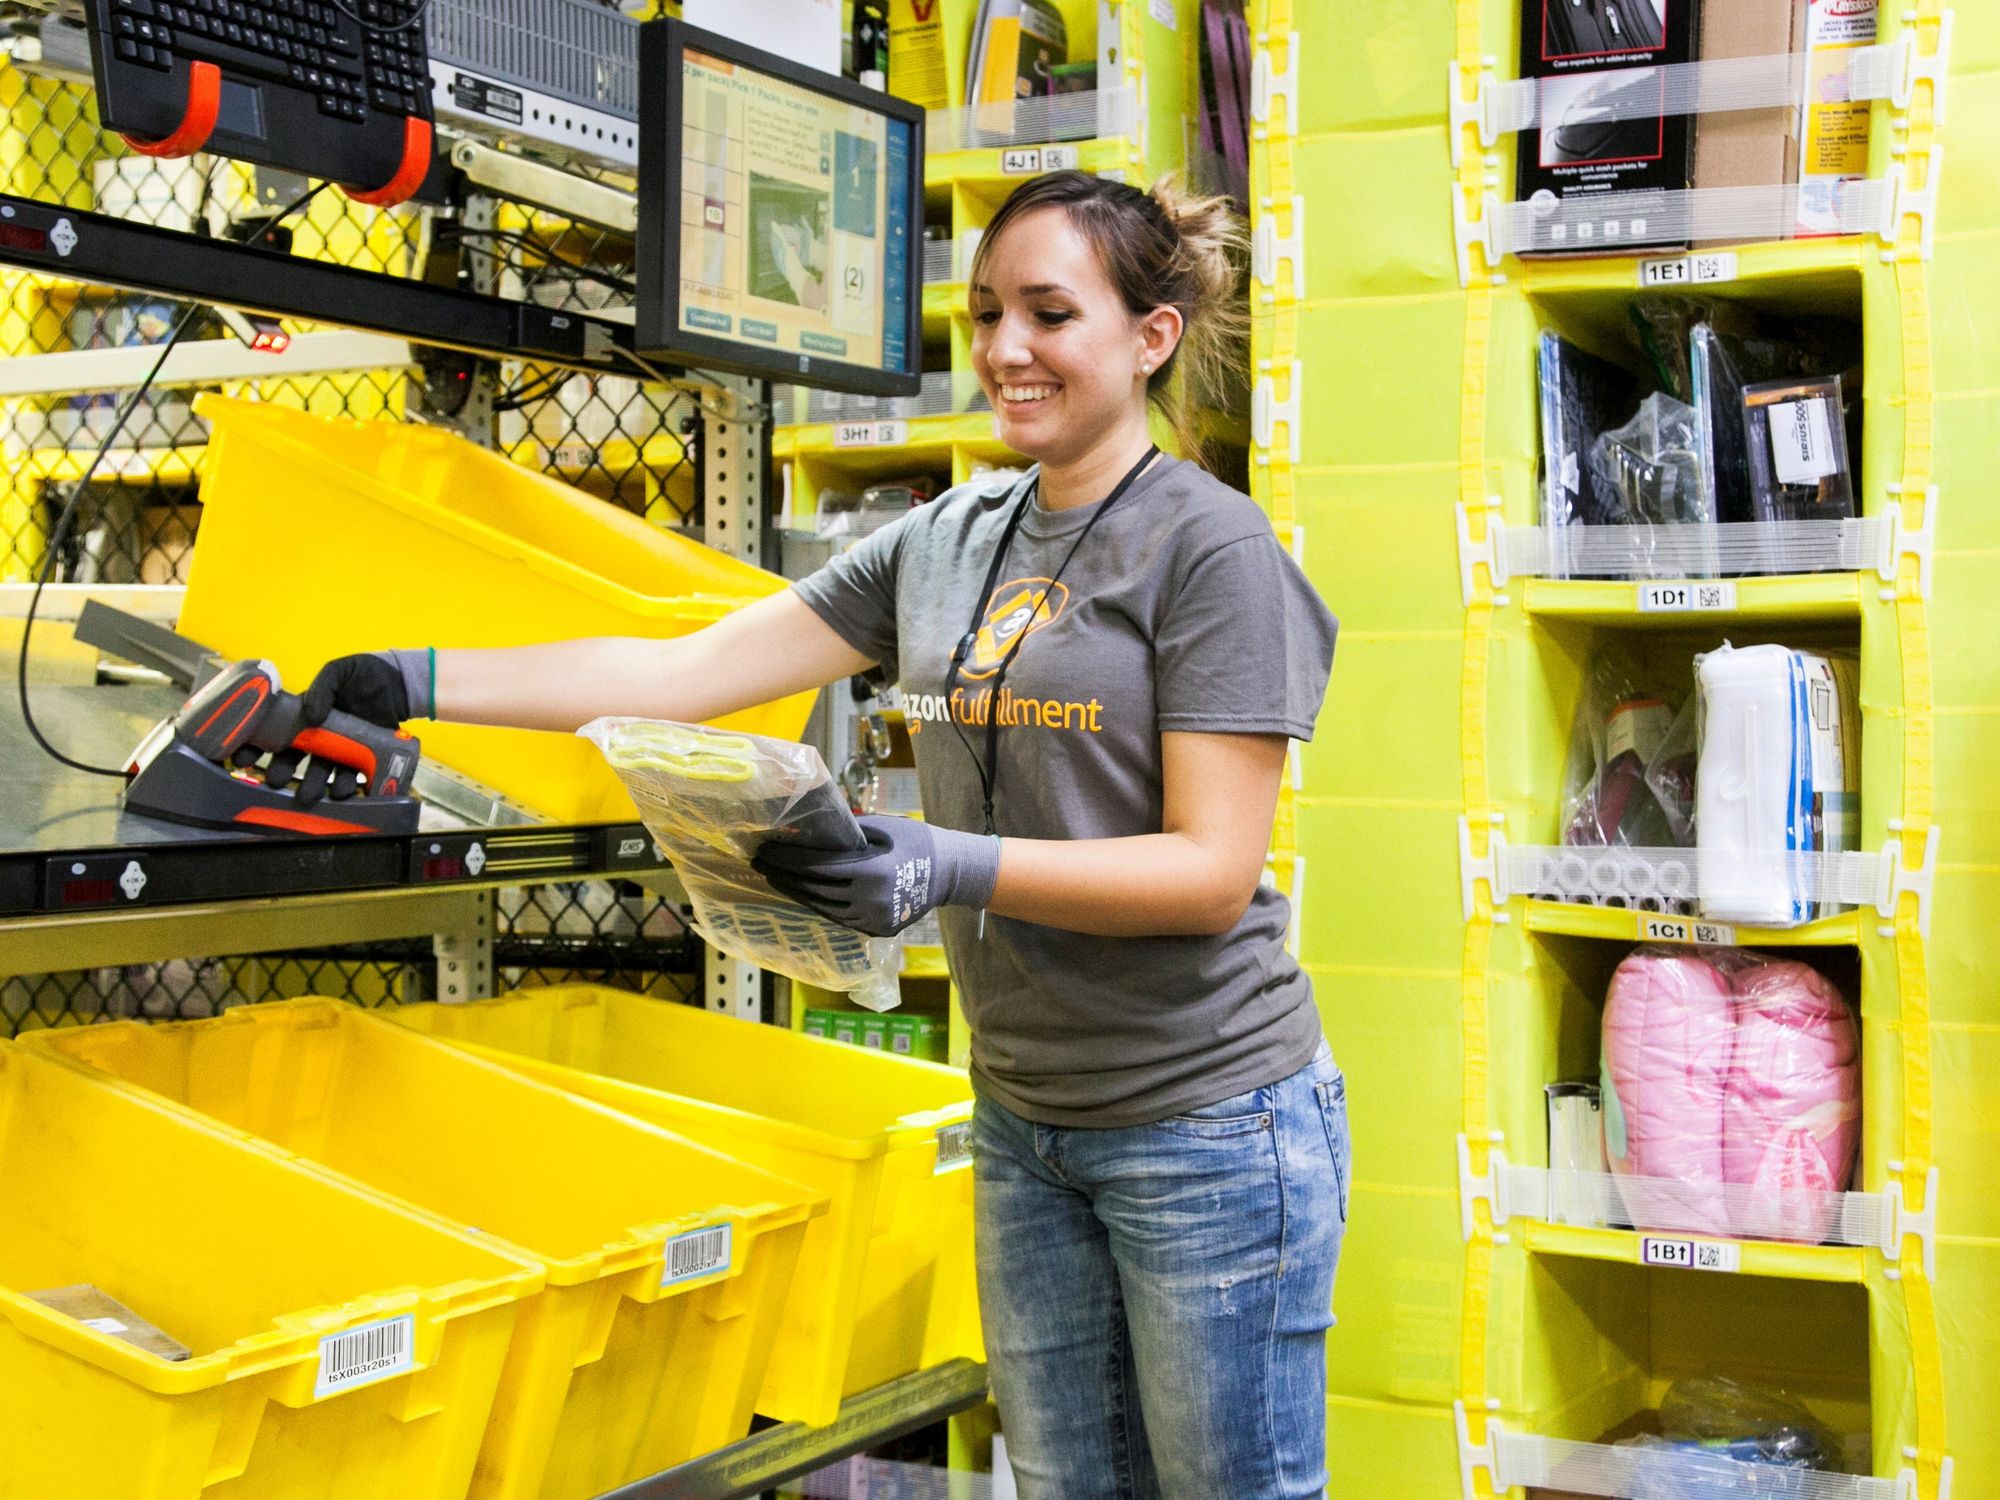 An Amazon warehouse worker fulfills an order.